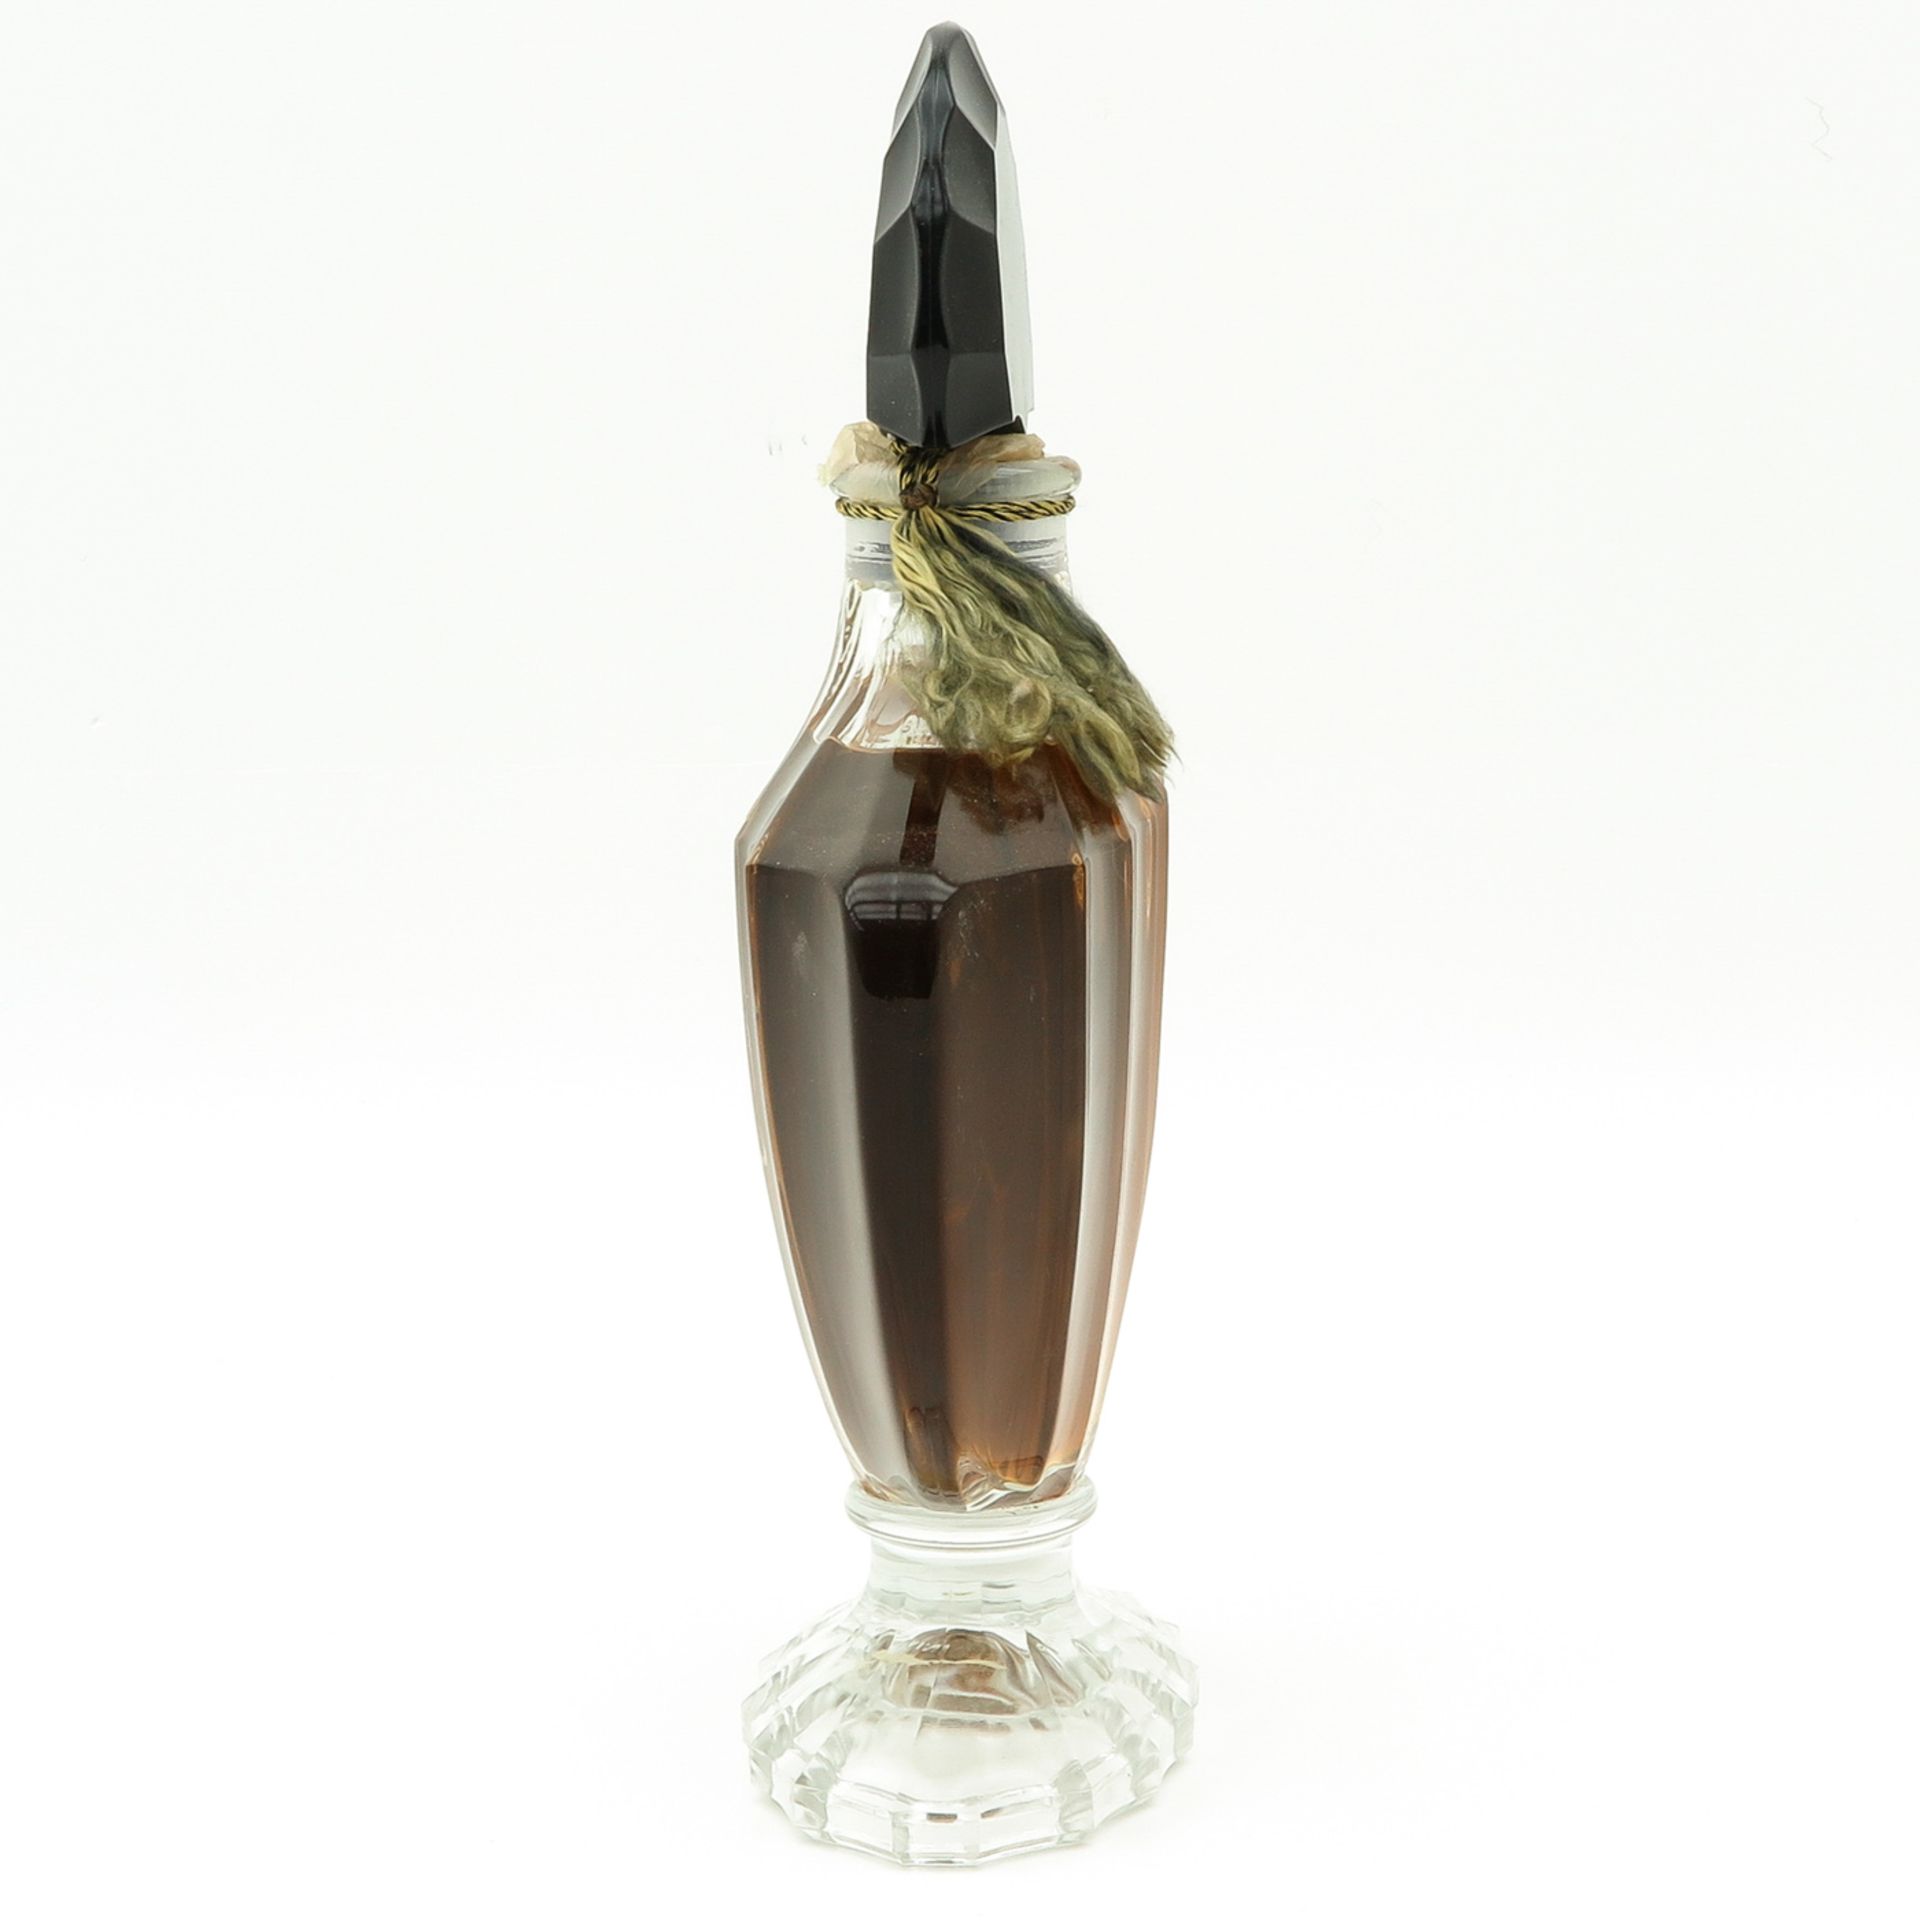 A Large Guerlain Paris Shalimar Perfume bottle - Image 2 of 4